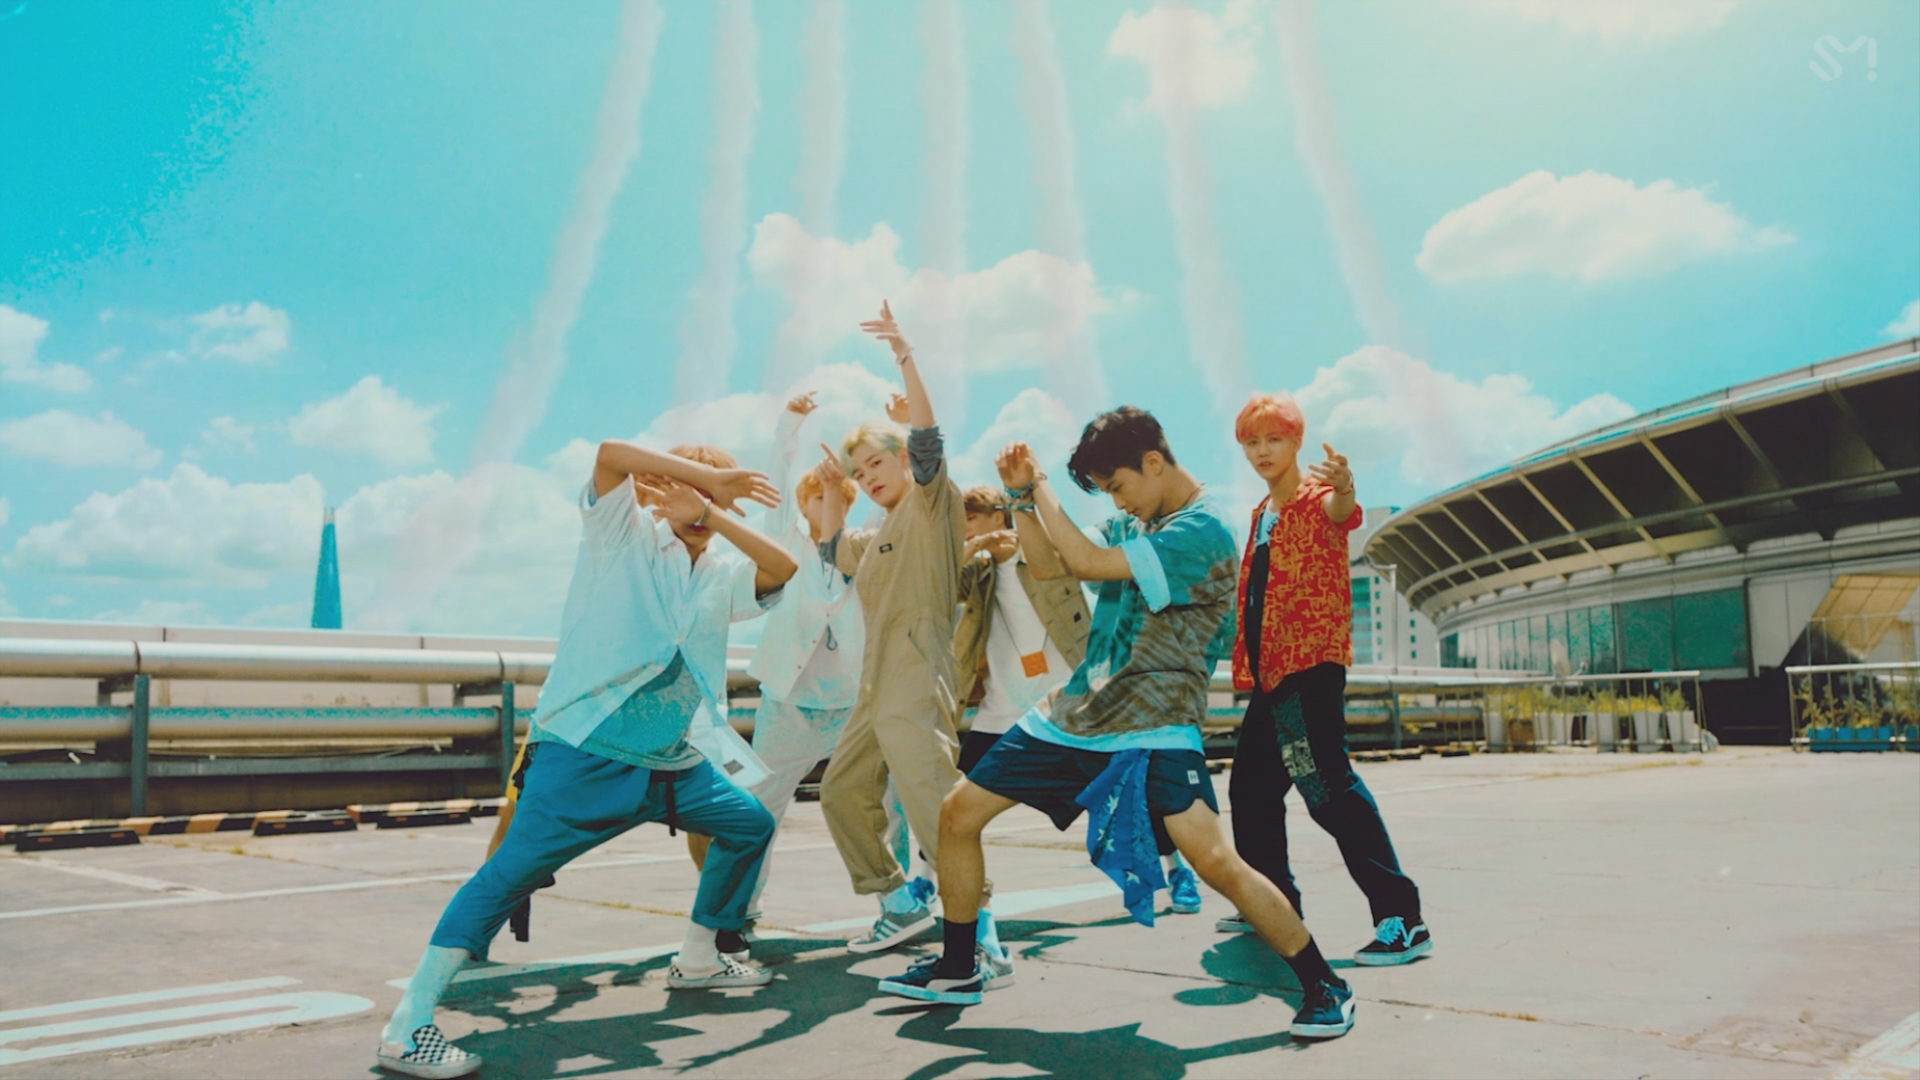 NCT DREAM 엔시티 드림 'We Go Up' MV